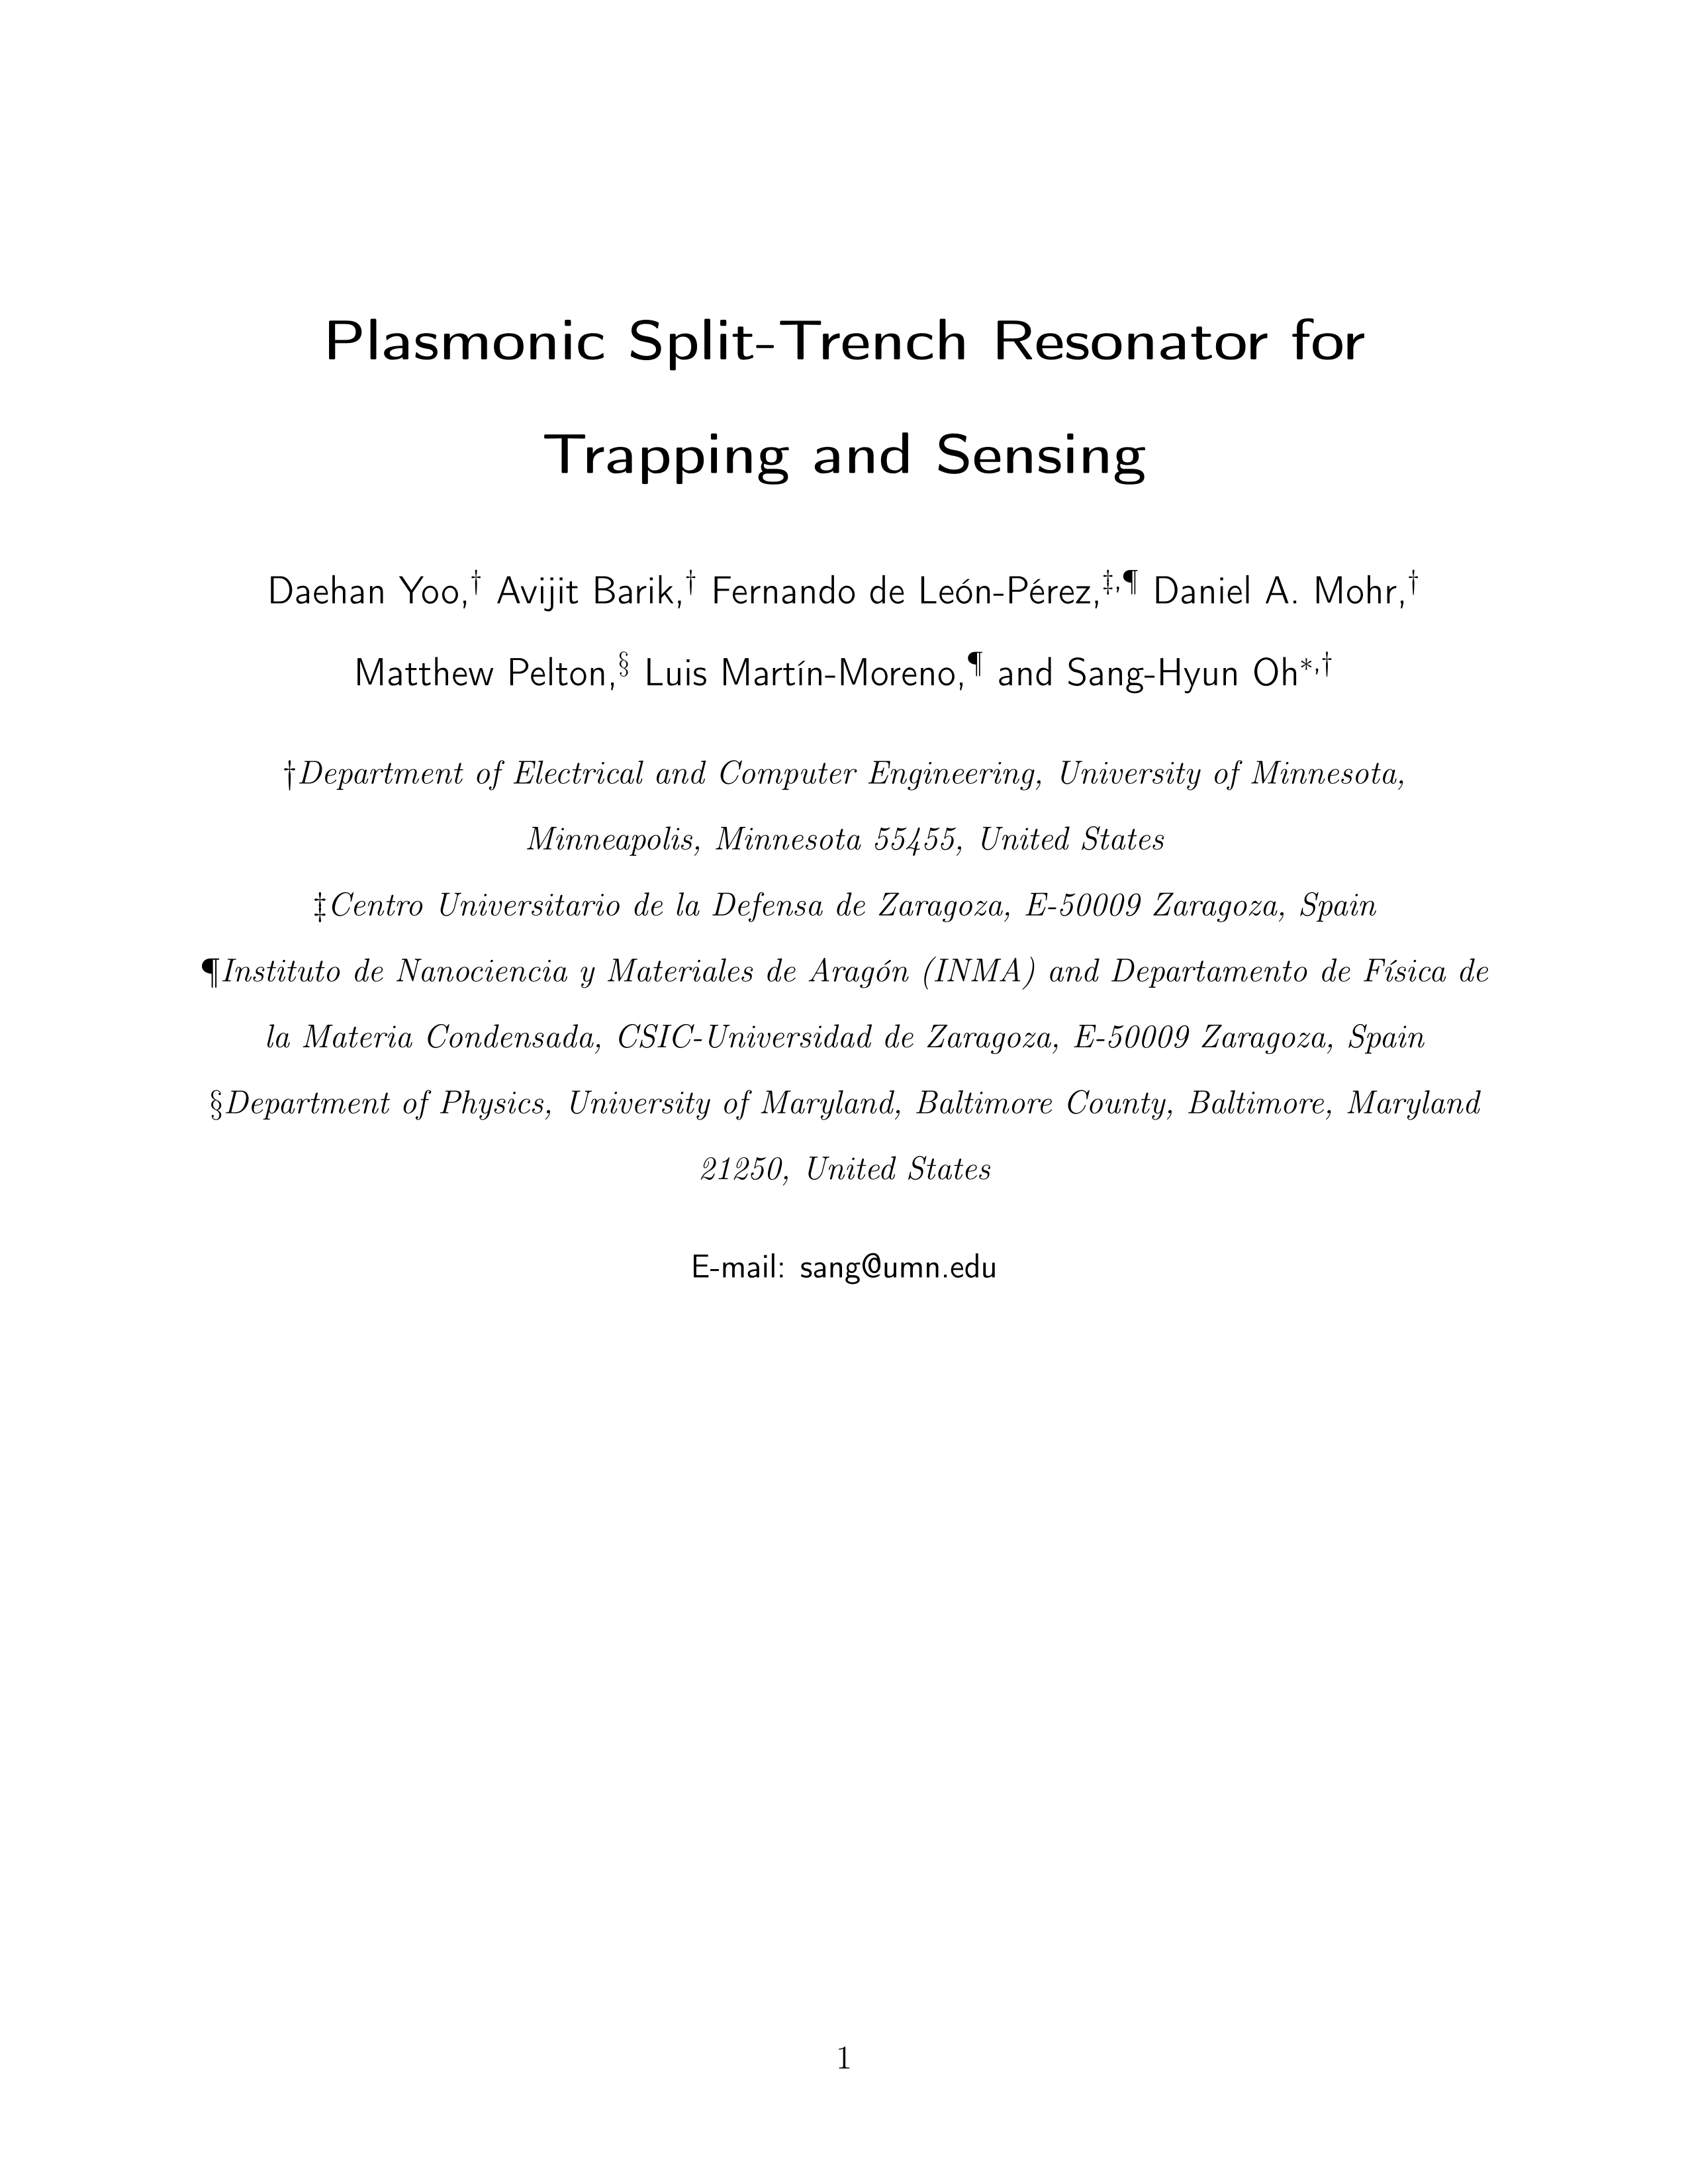 Plasmonic Split-Trench Resonator for Trapping and Sensing